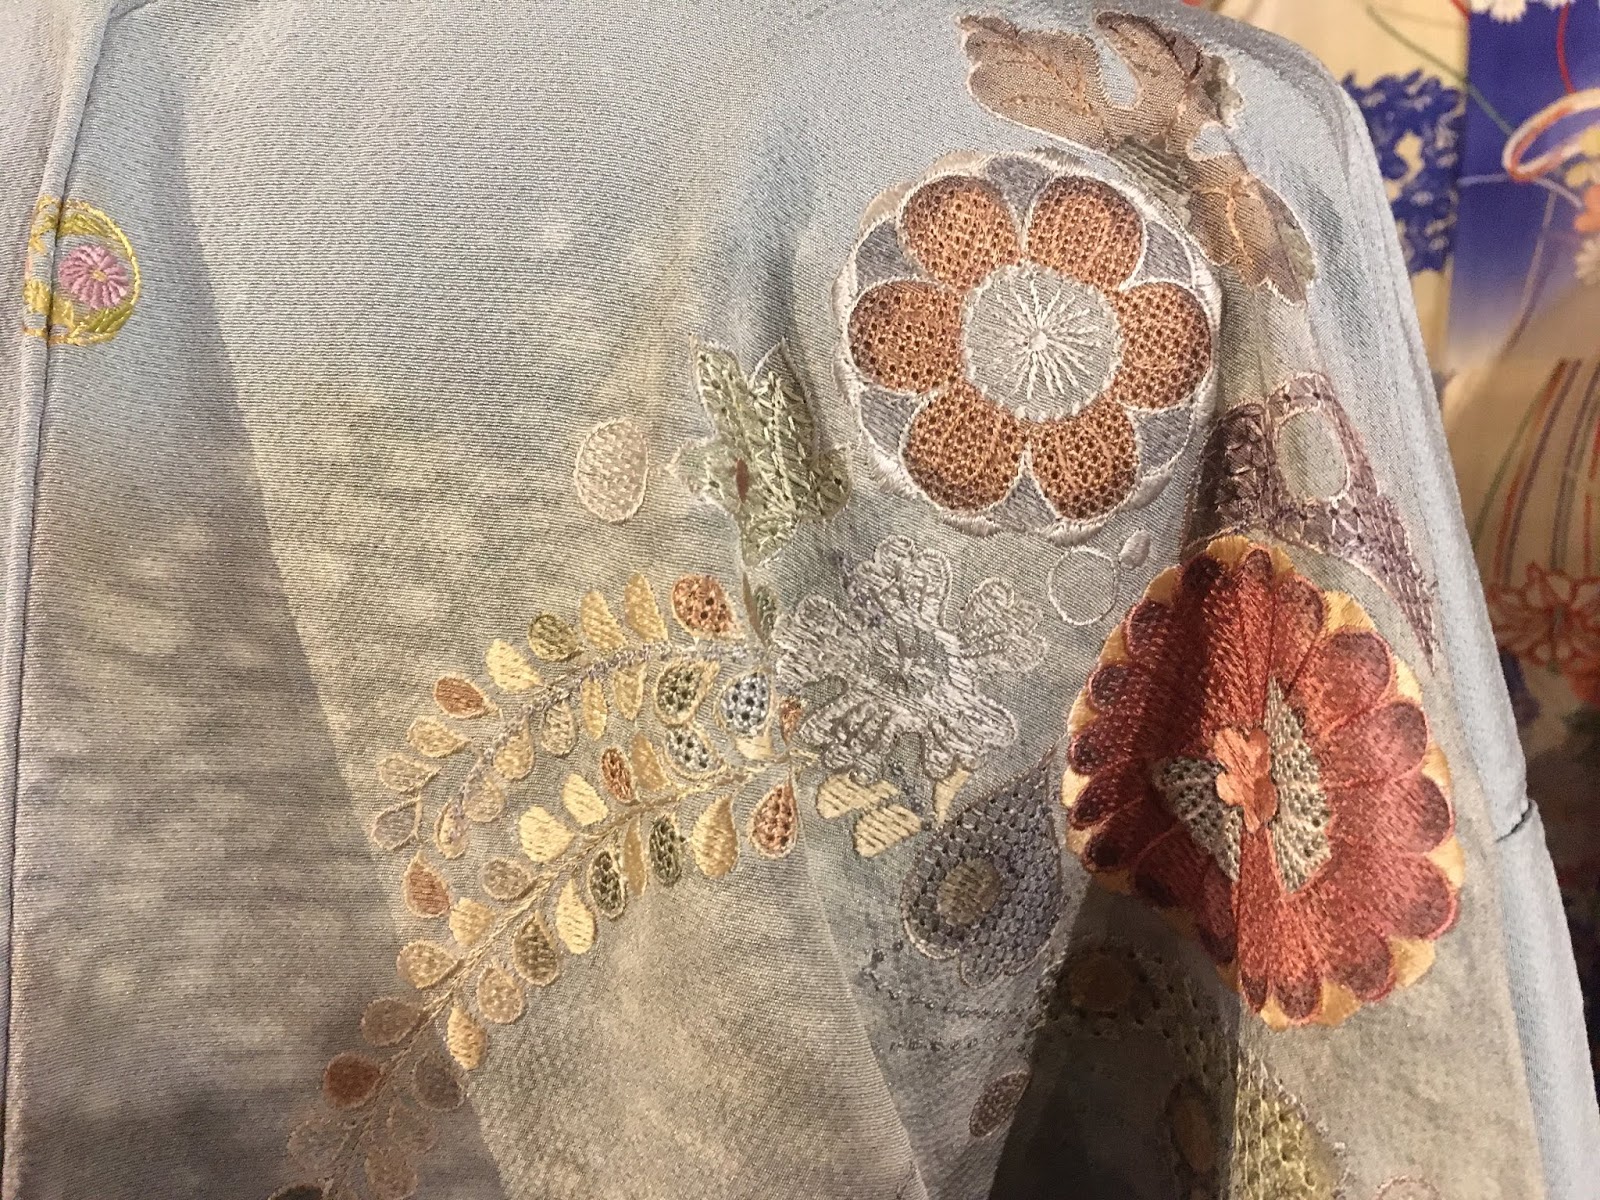 sashiko and other stitching: November 2019